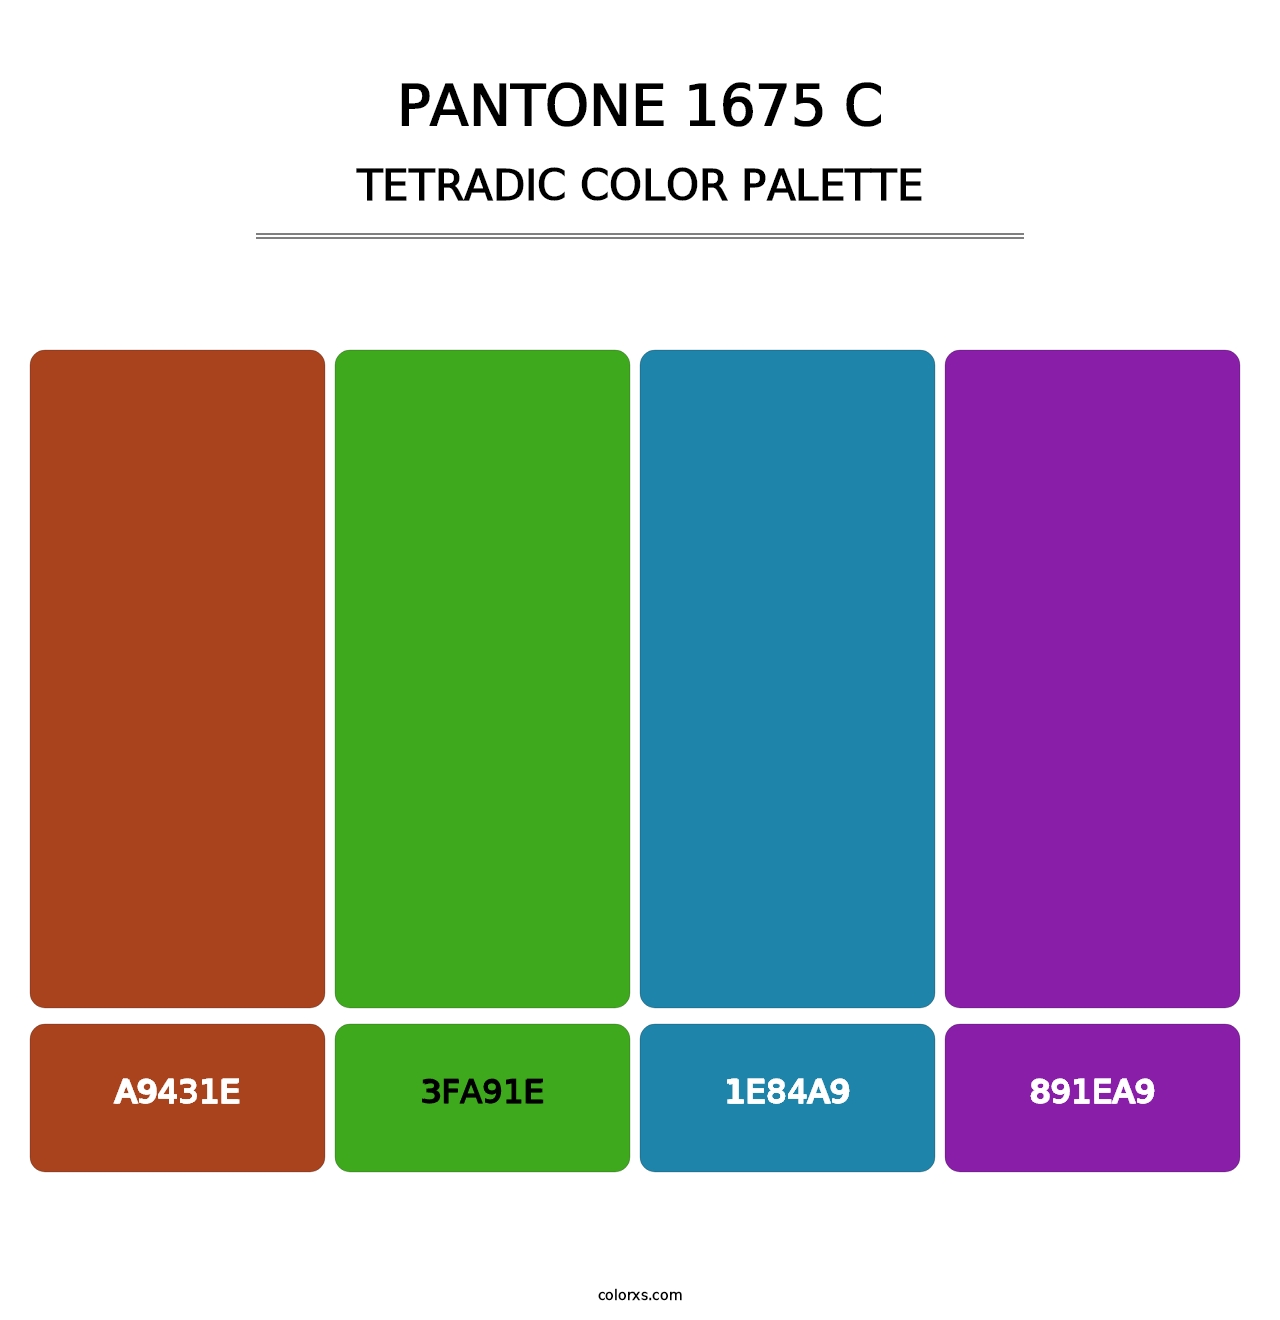 PANTONE 1675 C - Tetradic Color Palette